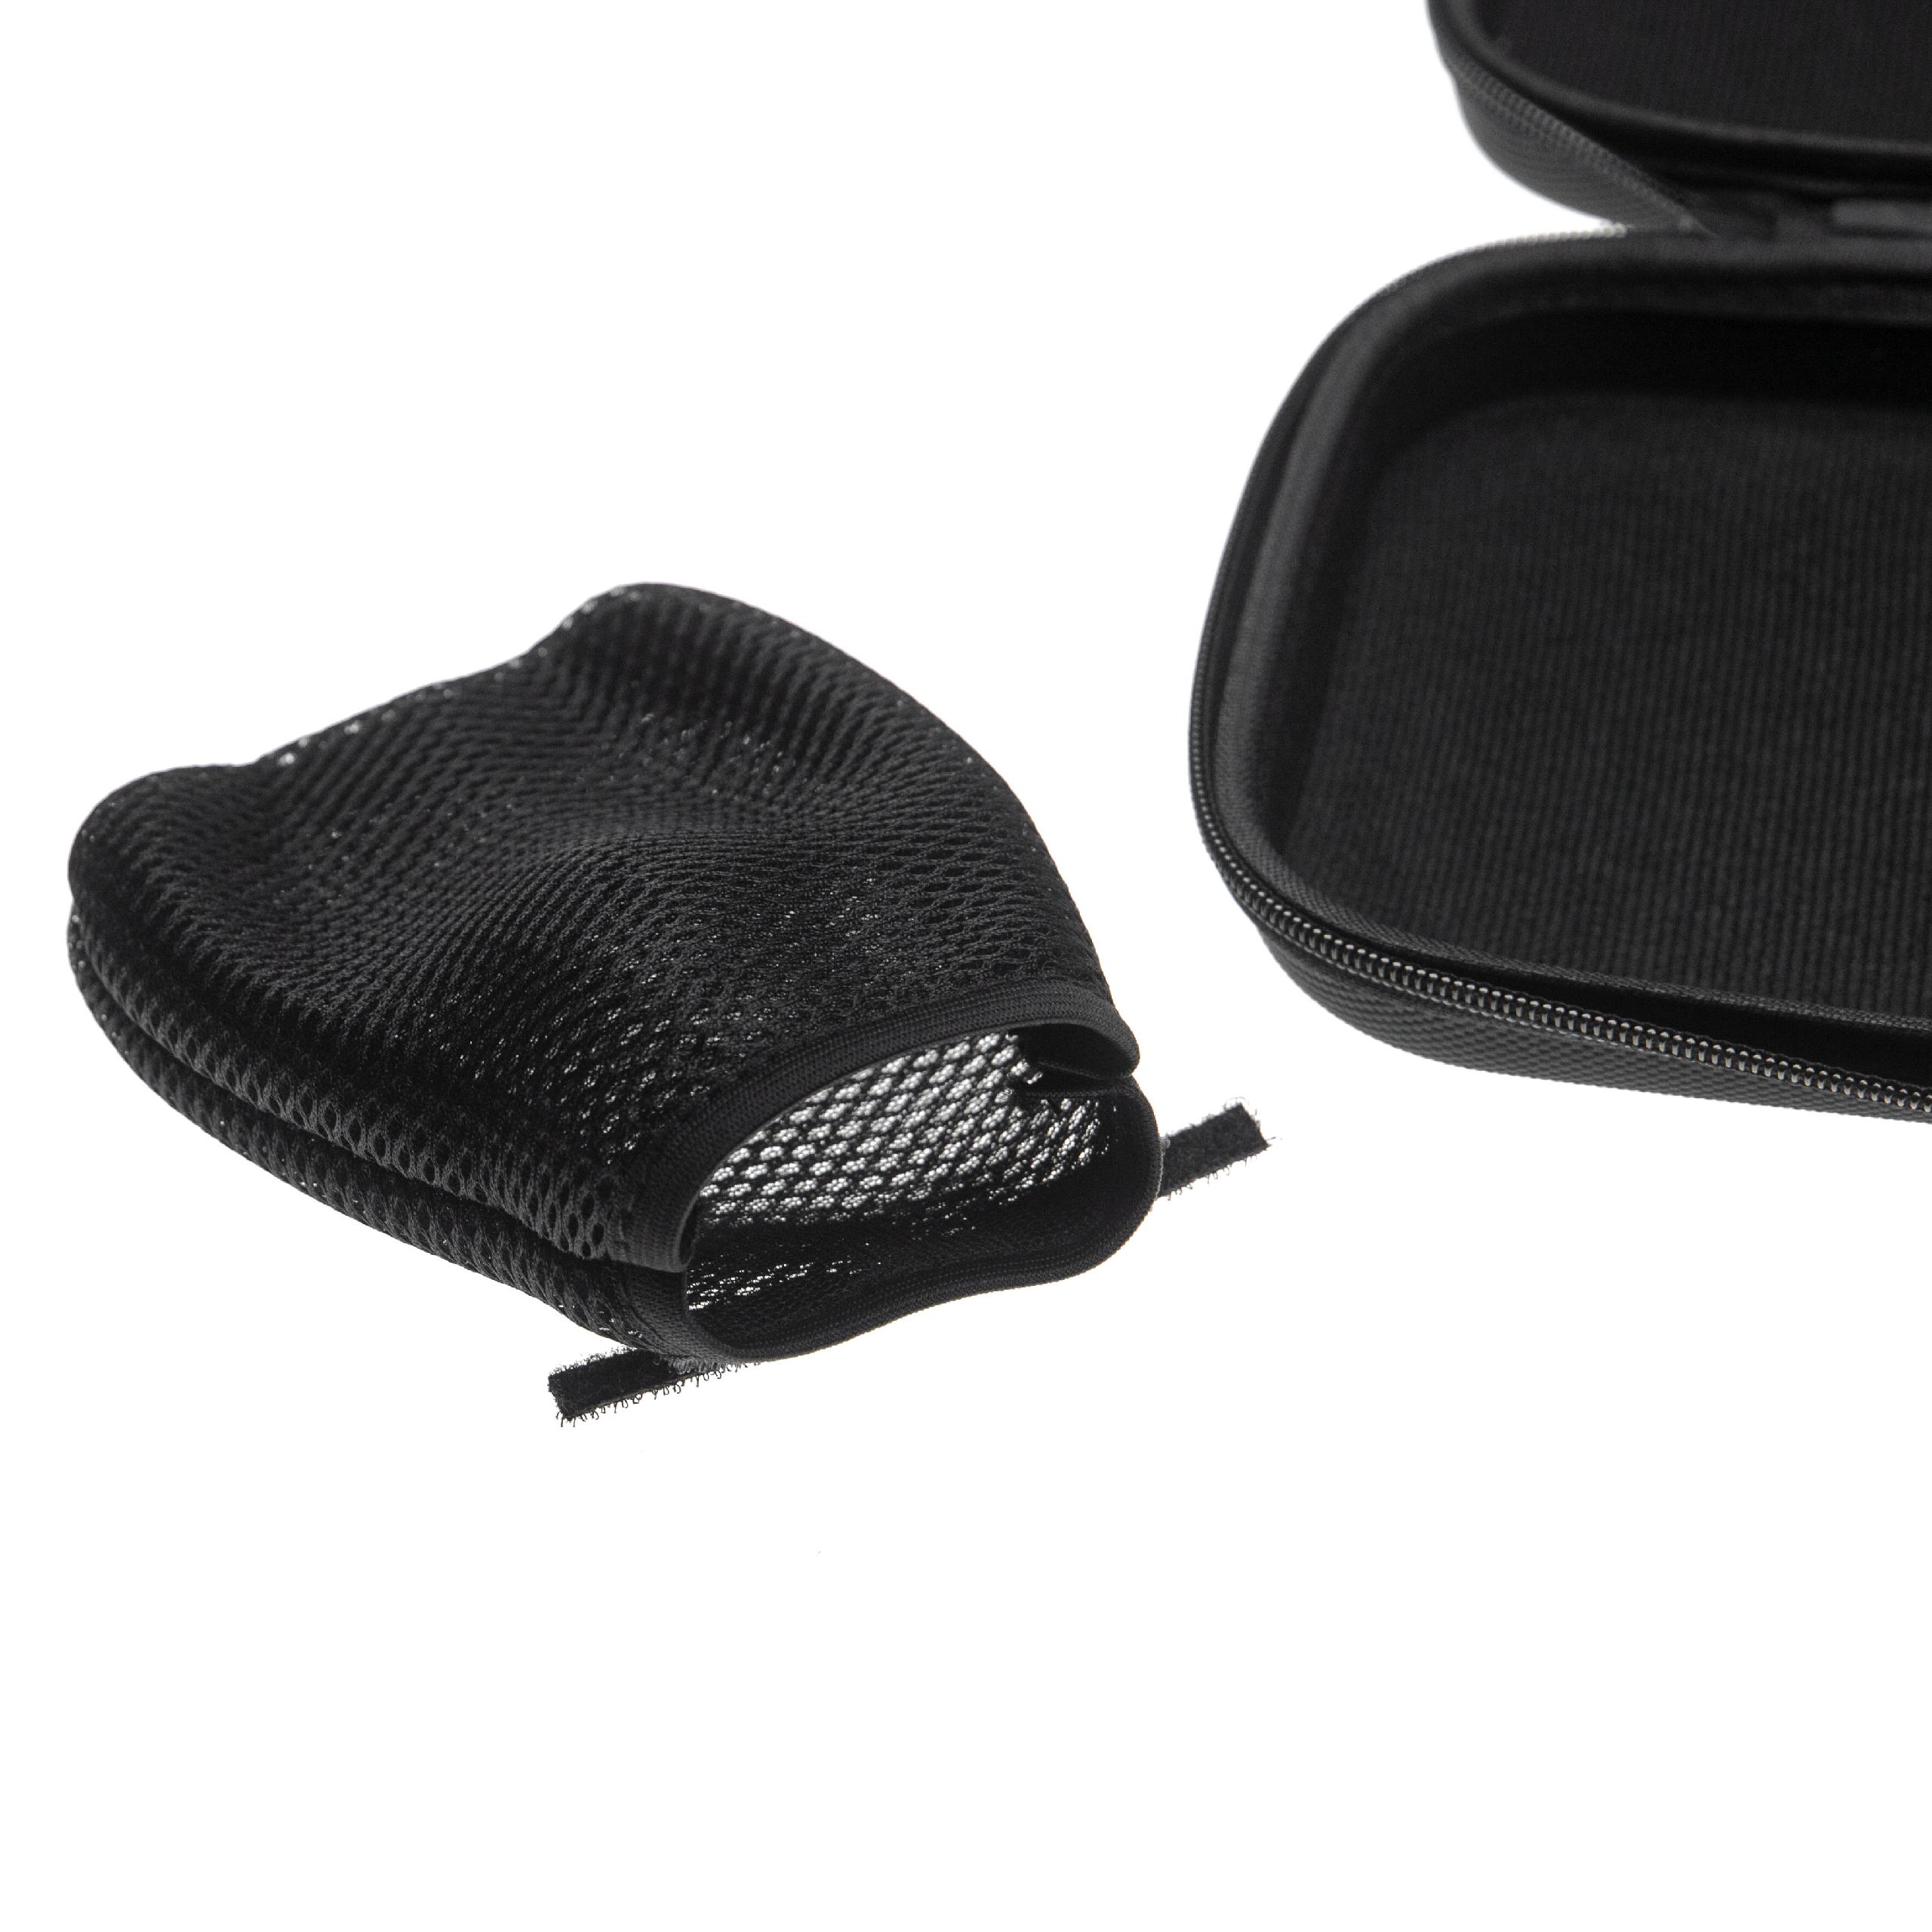 vhbw Storage CaseHair Curler & Hair Waver Accessories - Travel Bag, Organiser, Black